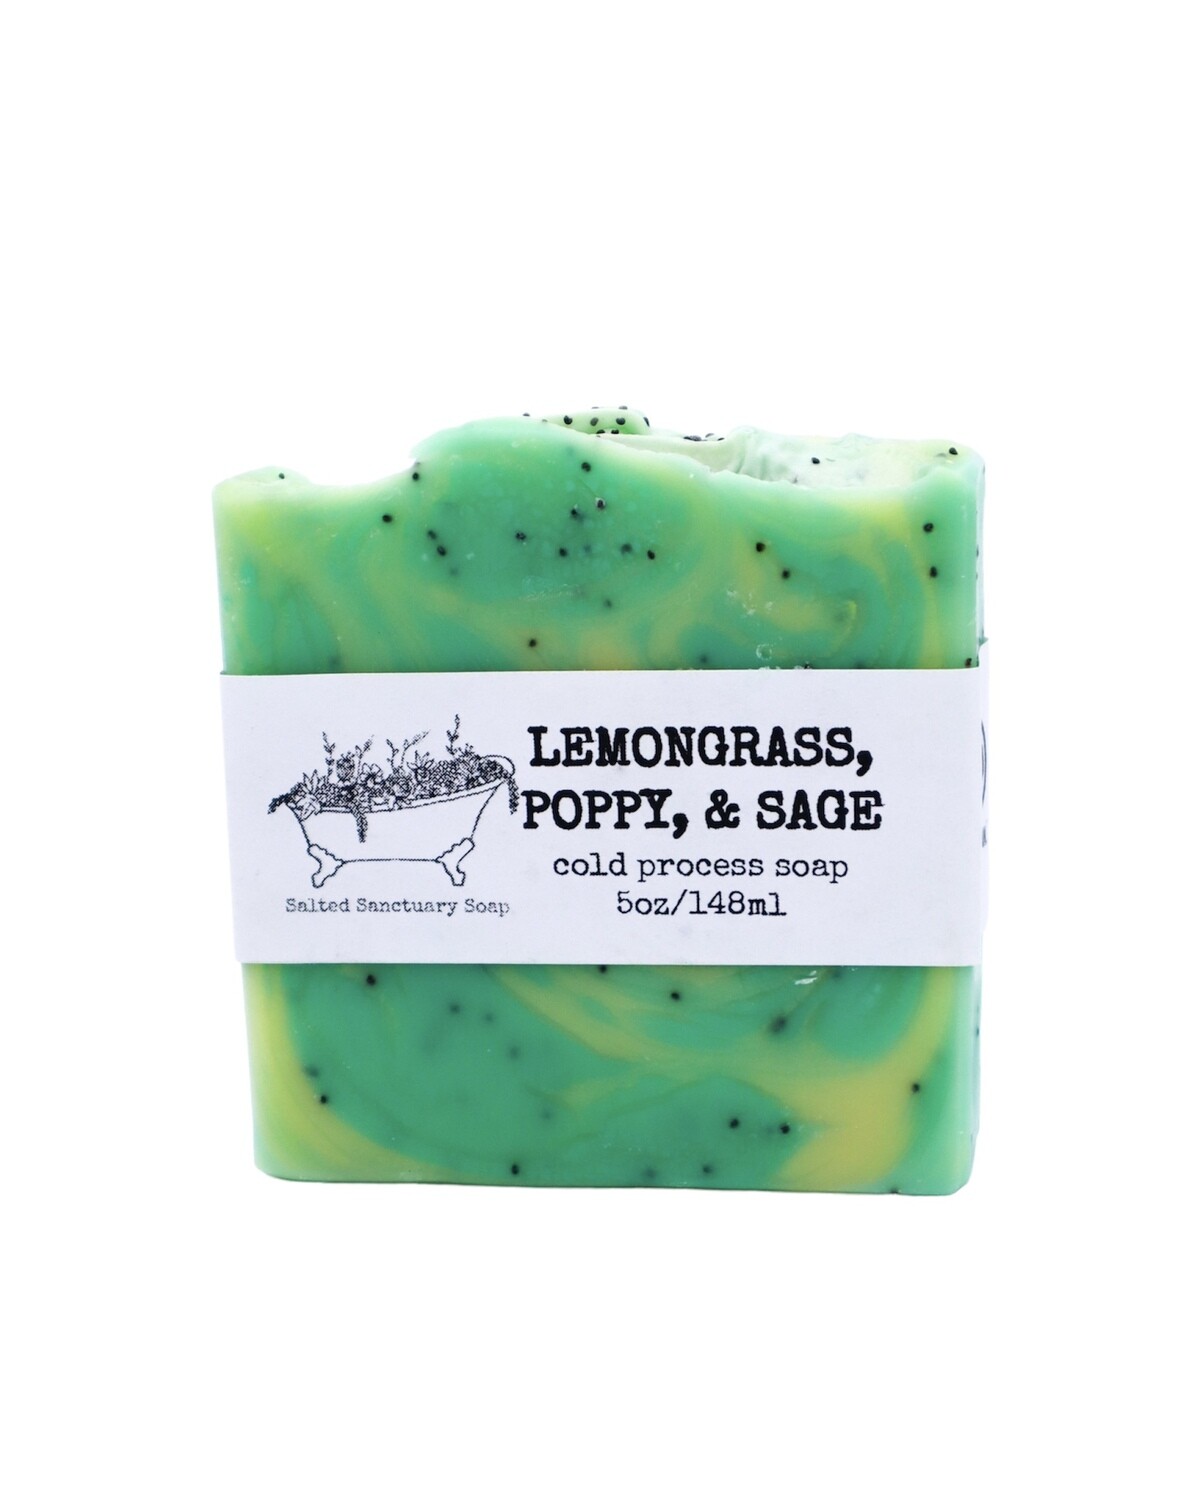 Lemongrass & Sage Soap